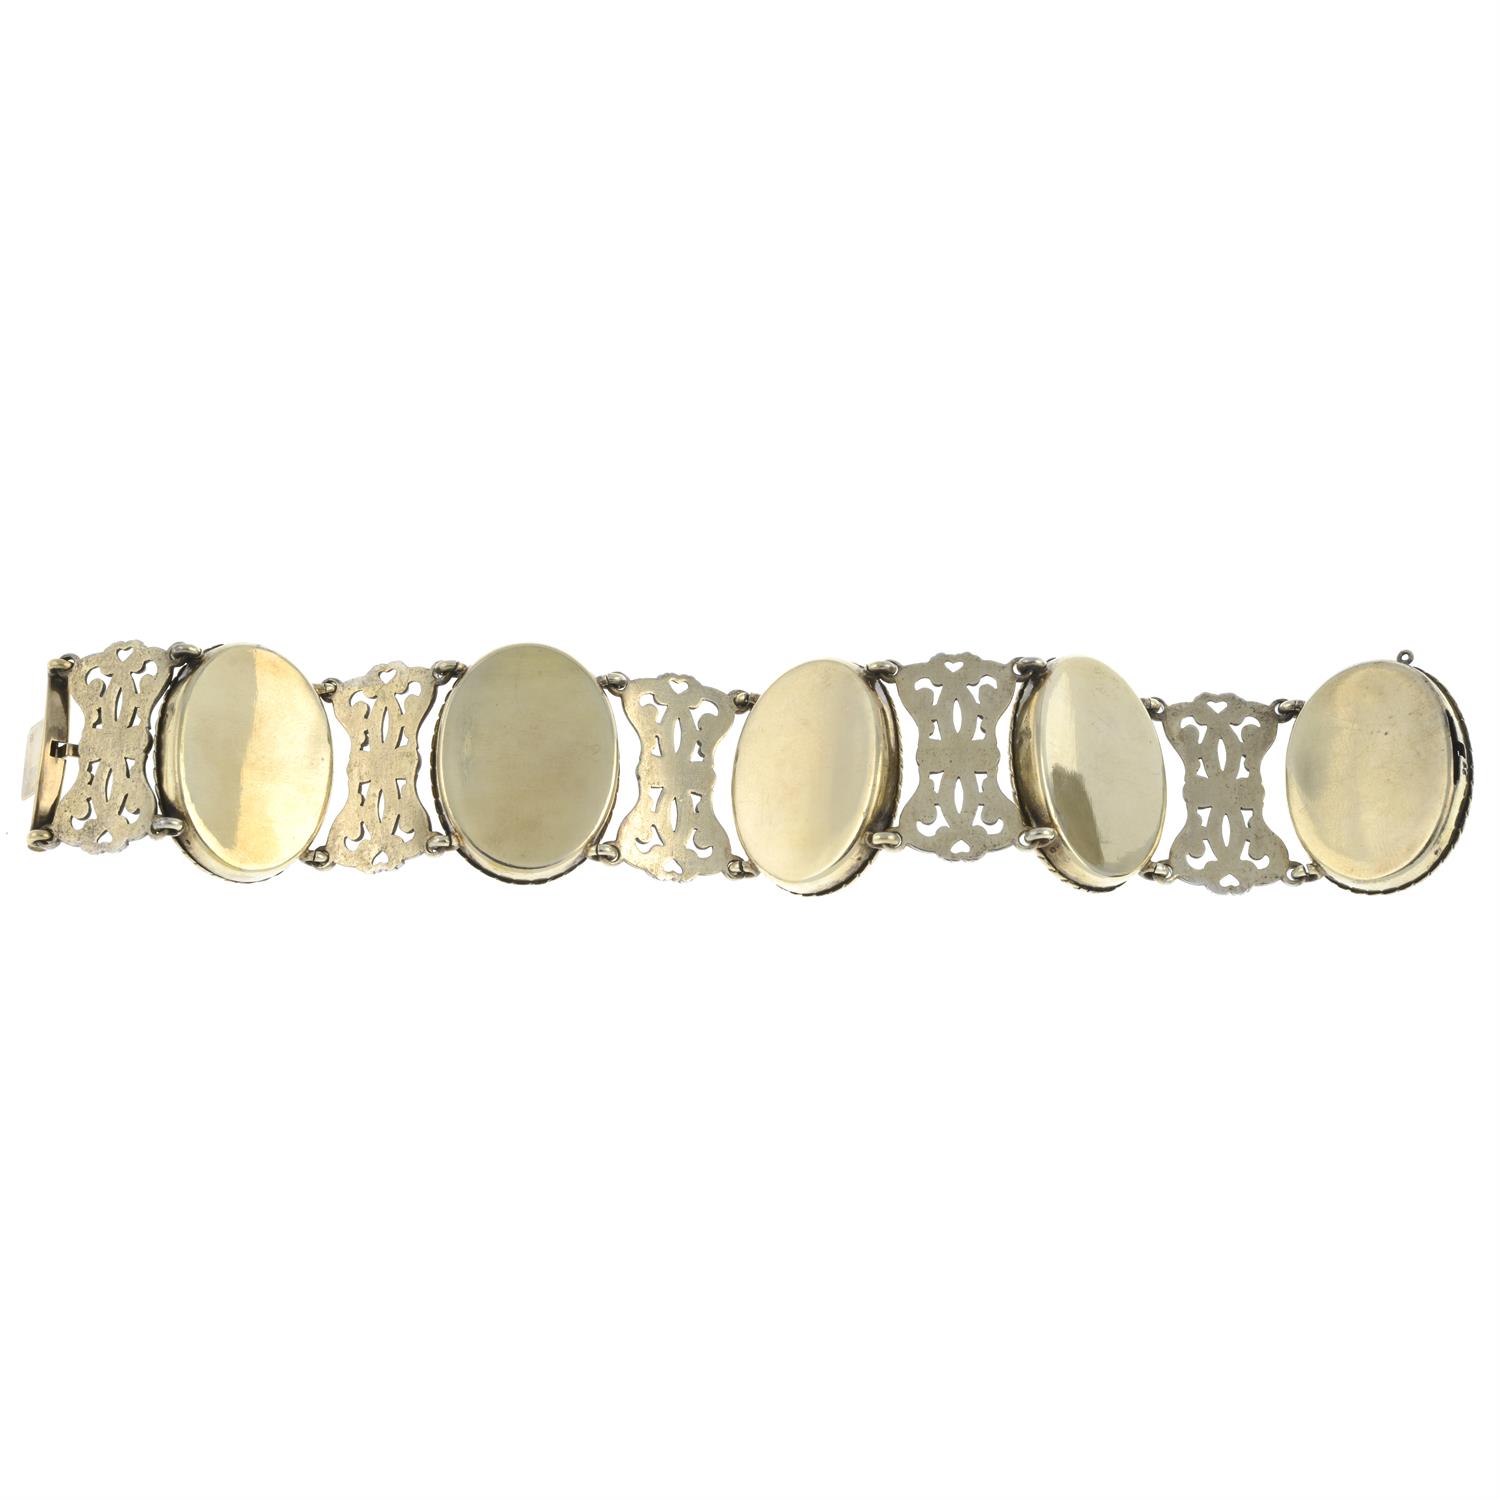 Silver and gold, garnet and enamel bracelet, J. Wiese - Image 4 of 6